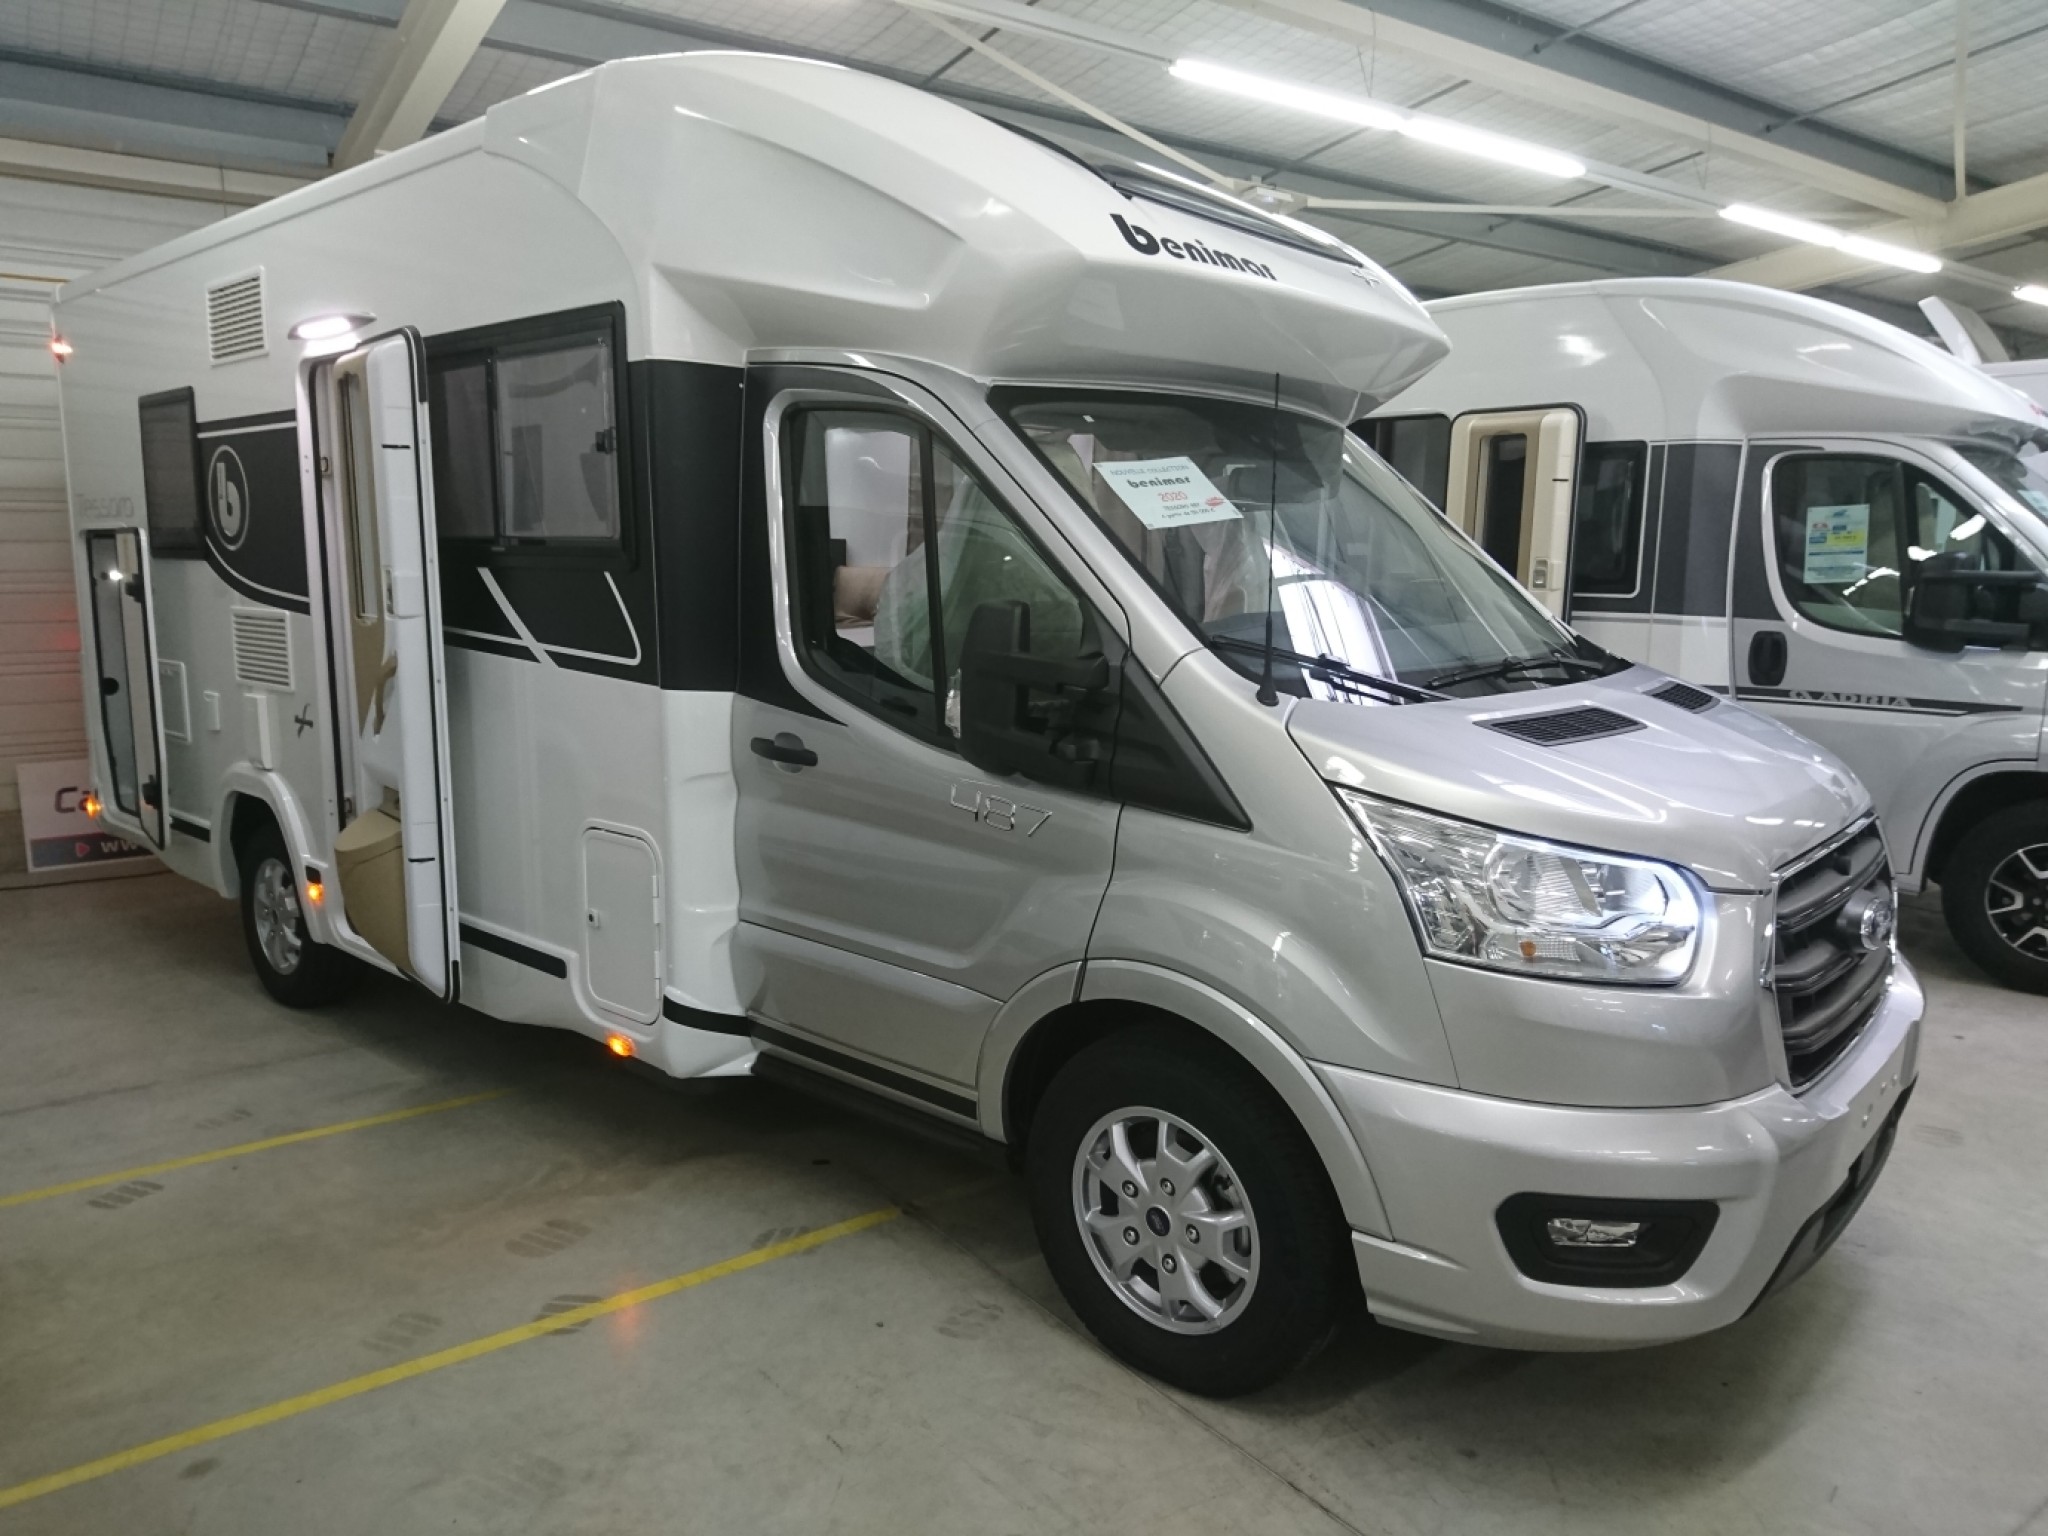 benimar-tessoro-487-northautokapp-neuf-de-2020-ford-camping-car-en